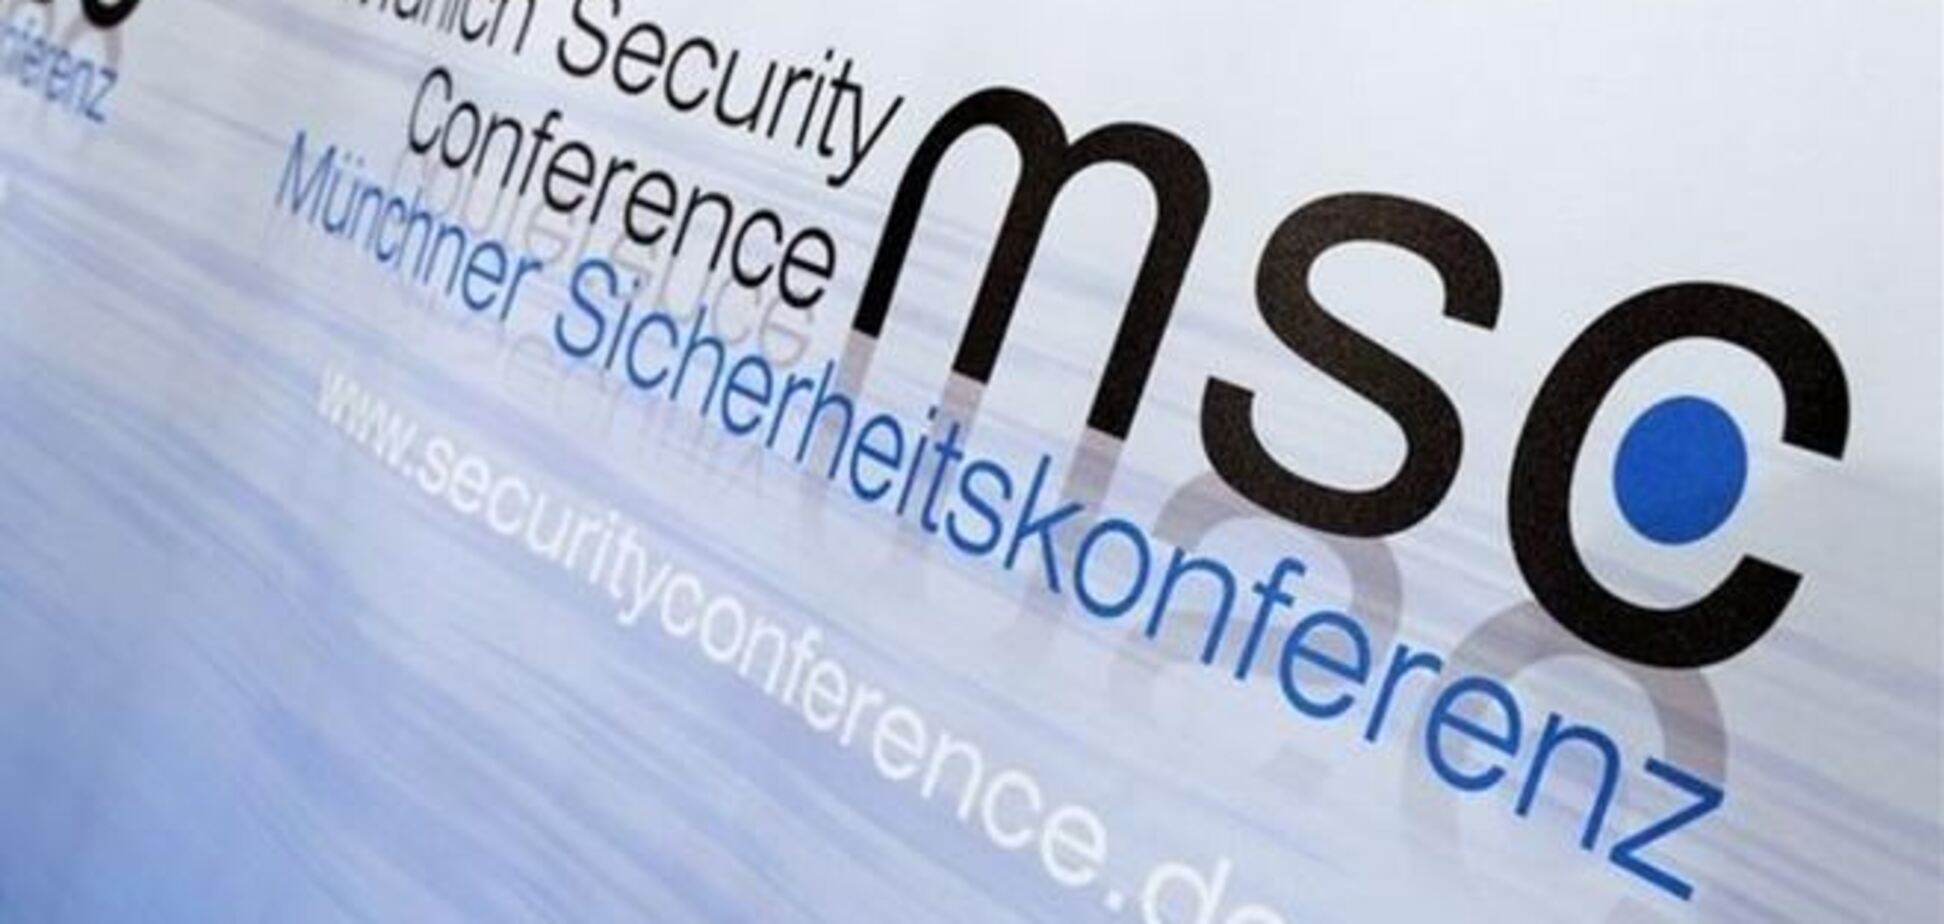 Евромайдан обсудят  на Мюнхенской конференции по безопасности, наряду с ситуацией в Сирии